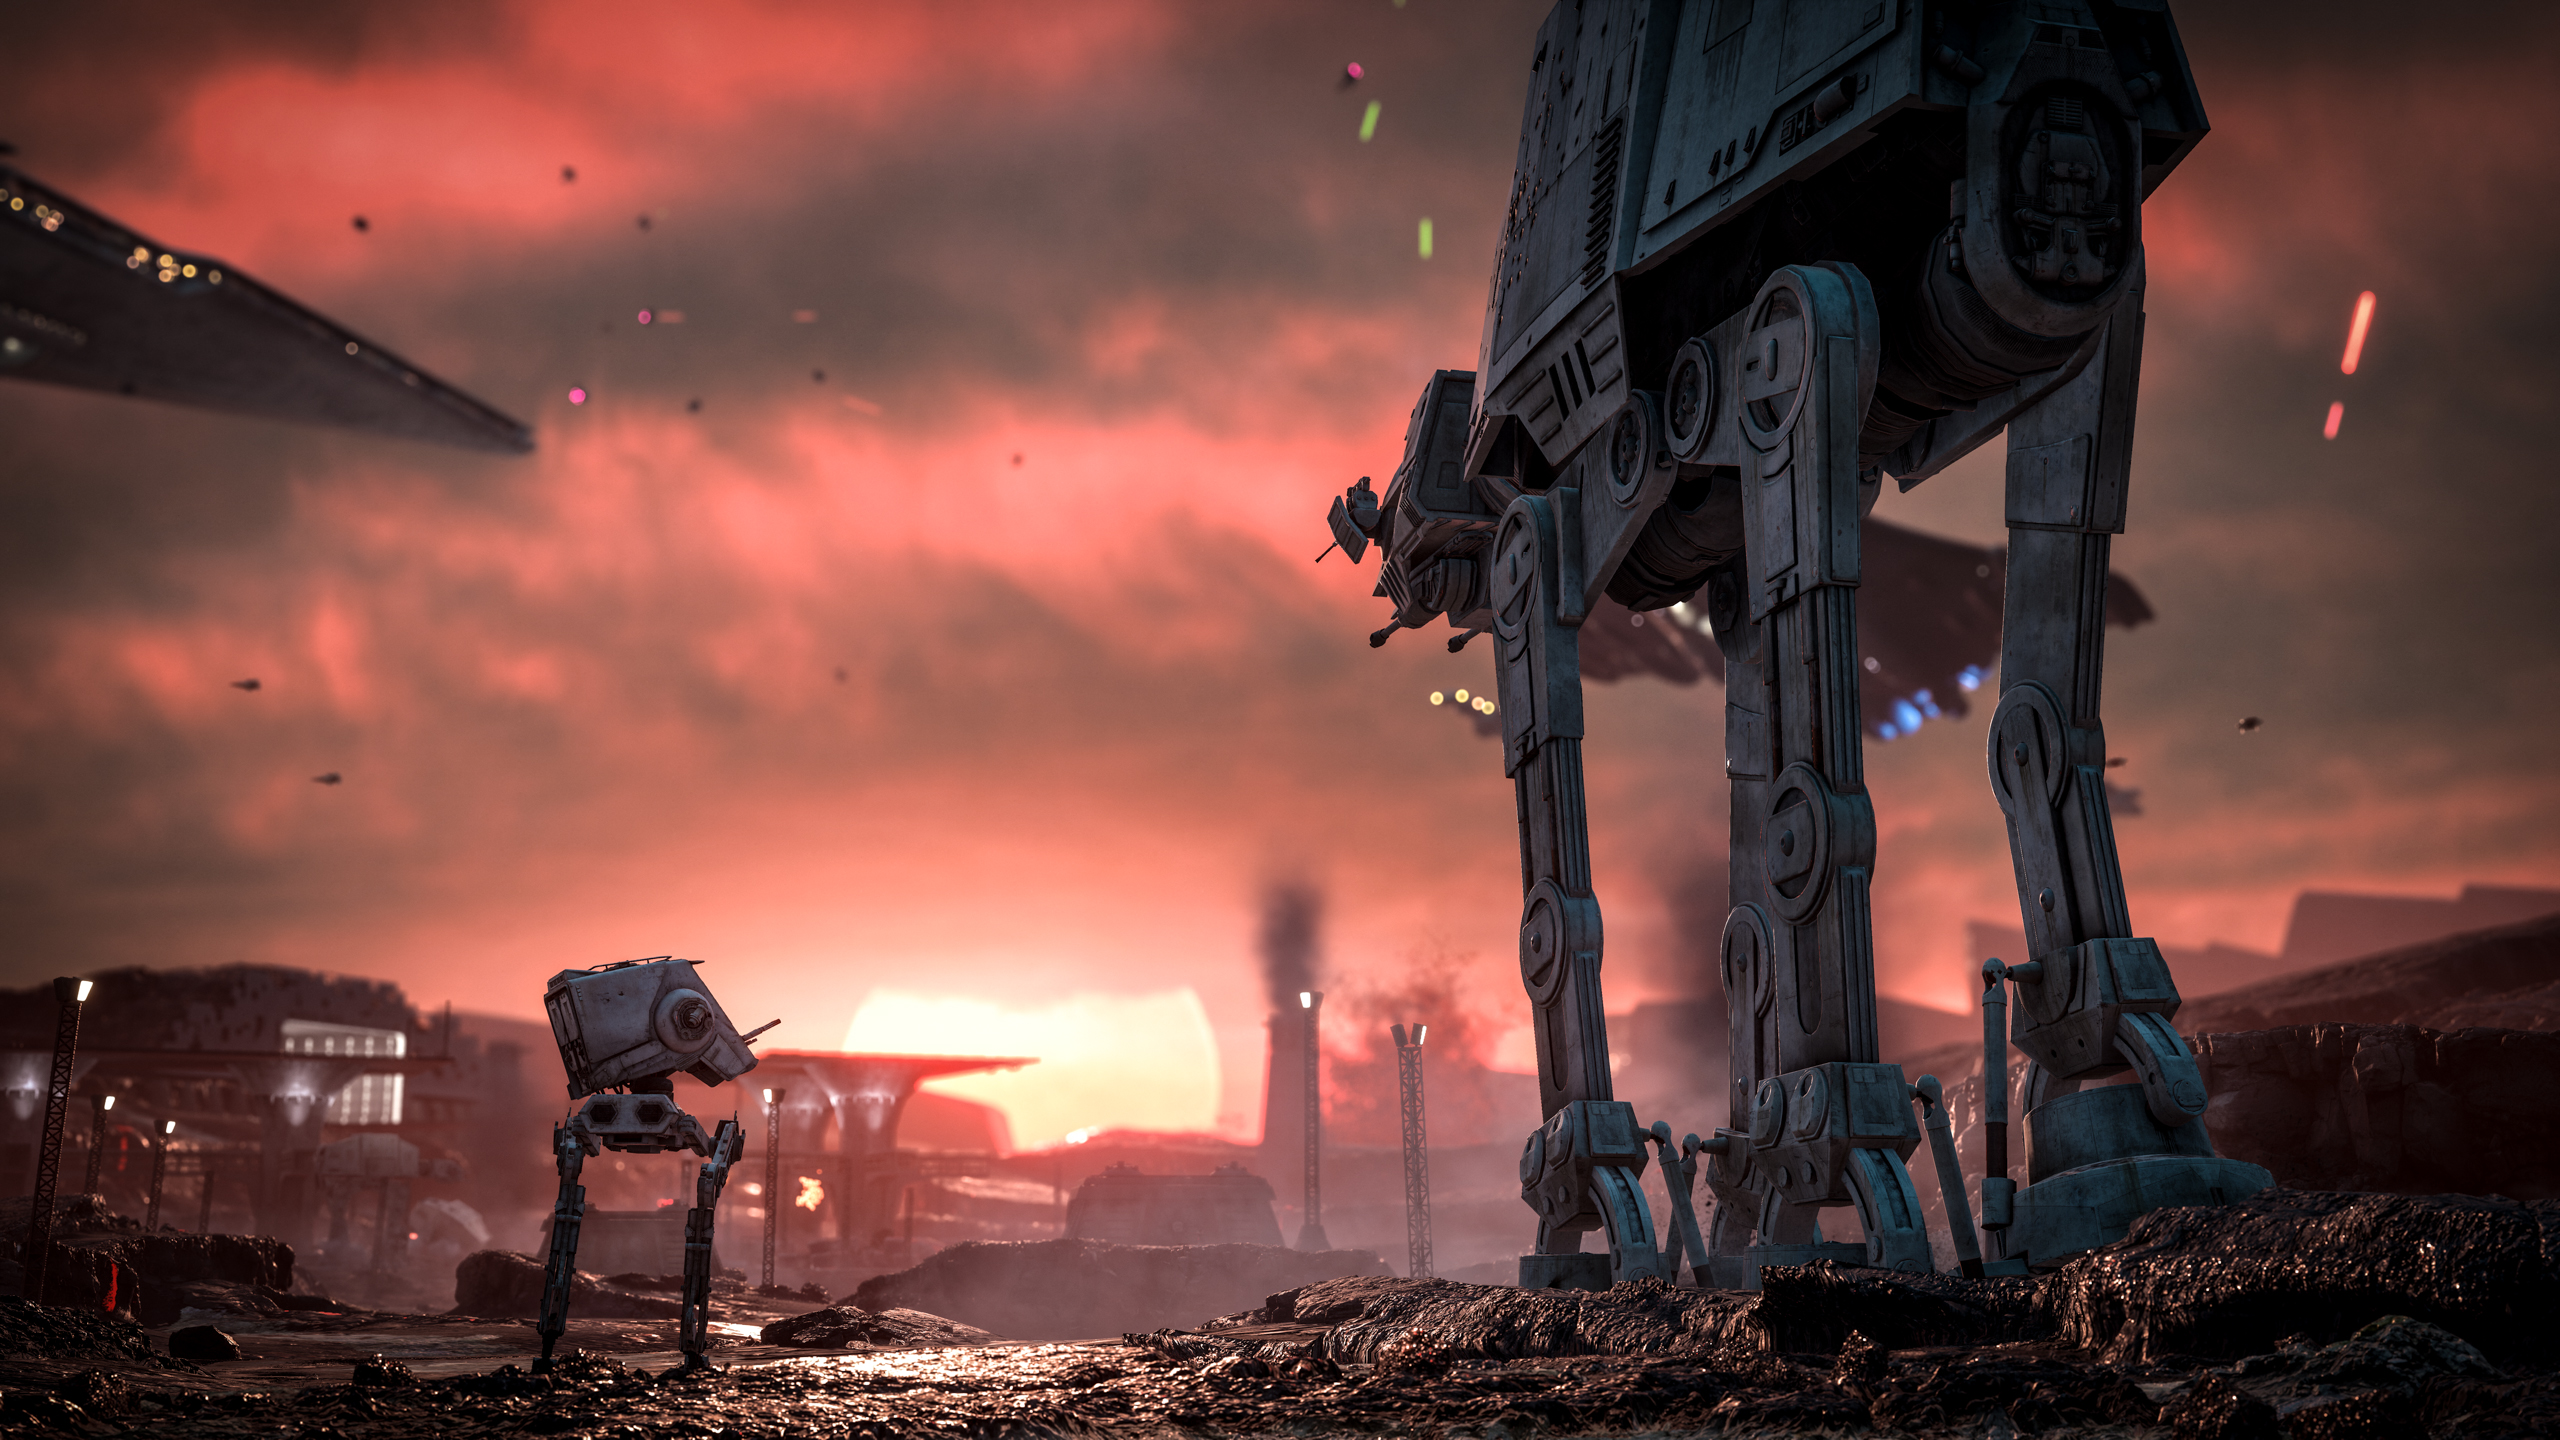 Star Wars Battlefront (2015) Backgrounds, Pictures, Images
 Star Wars Star Background